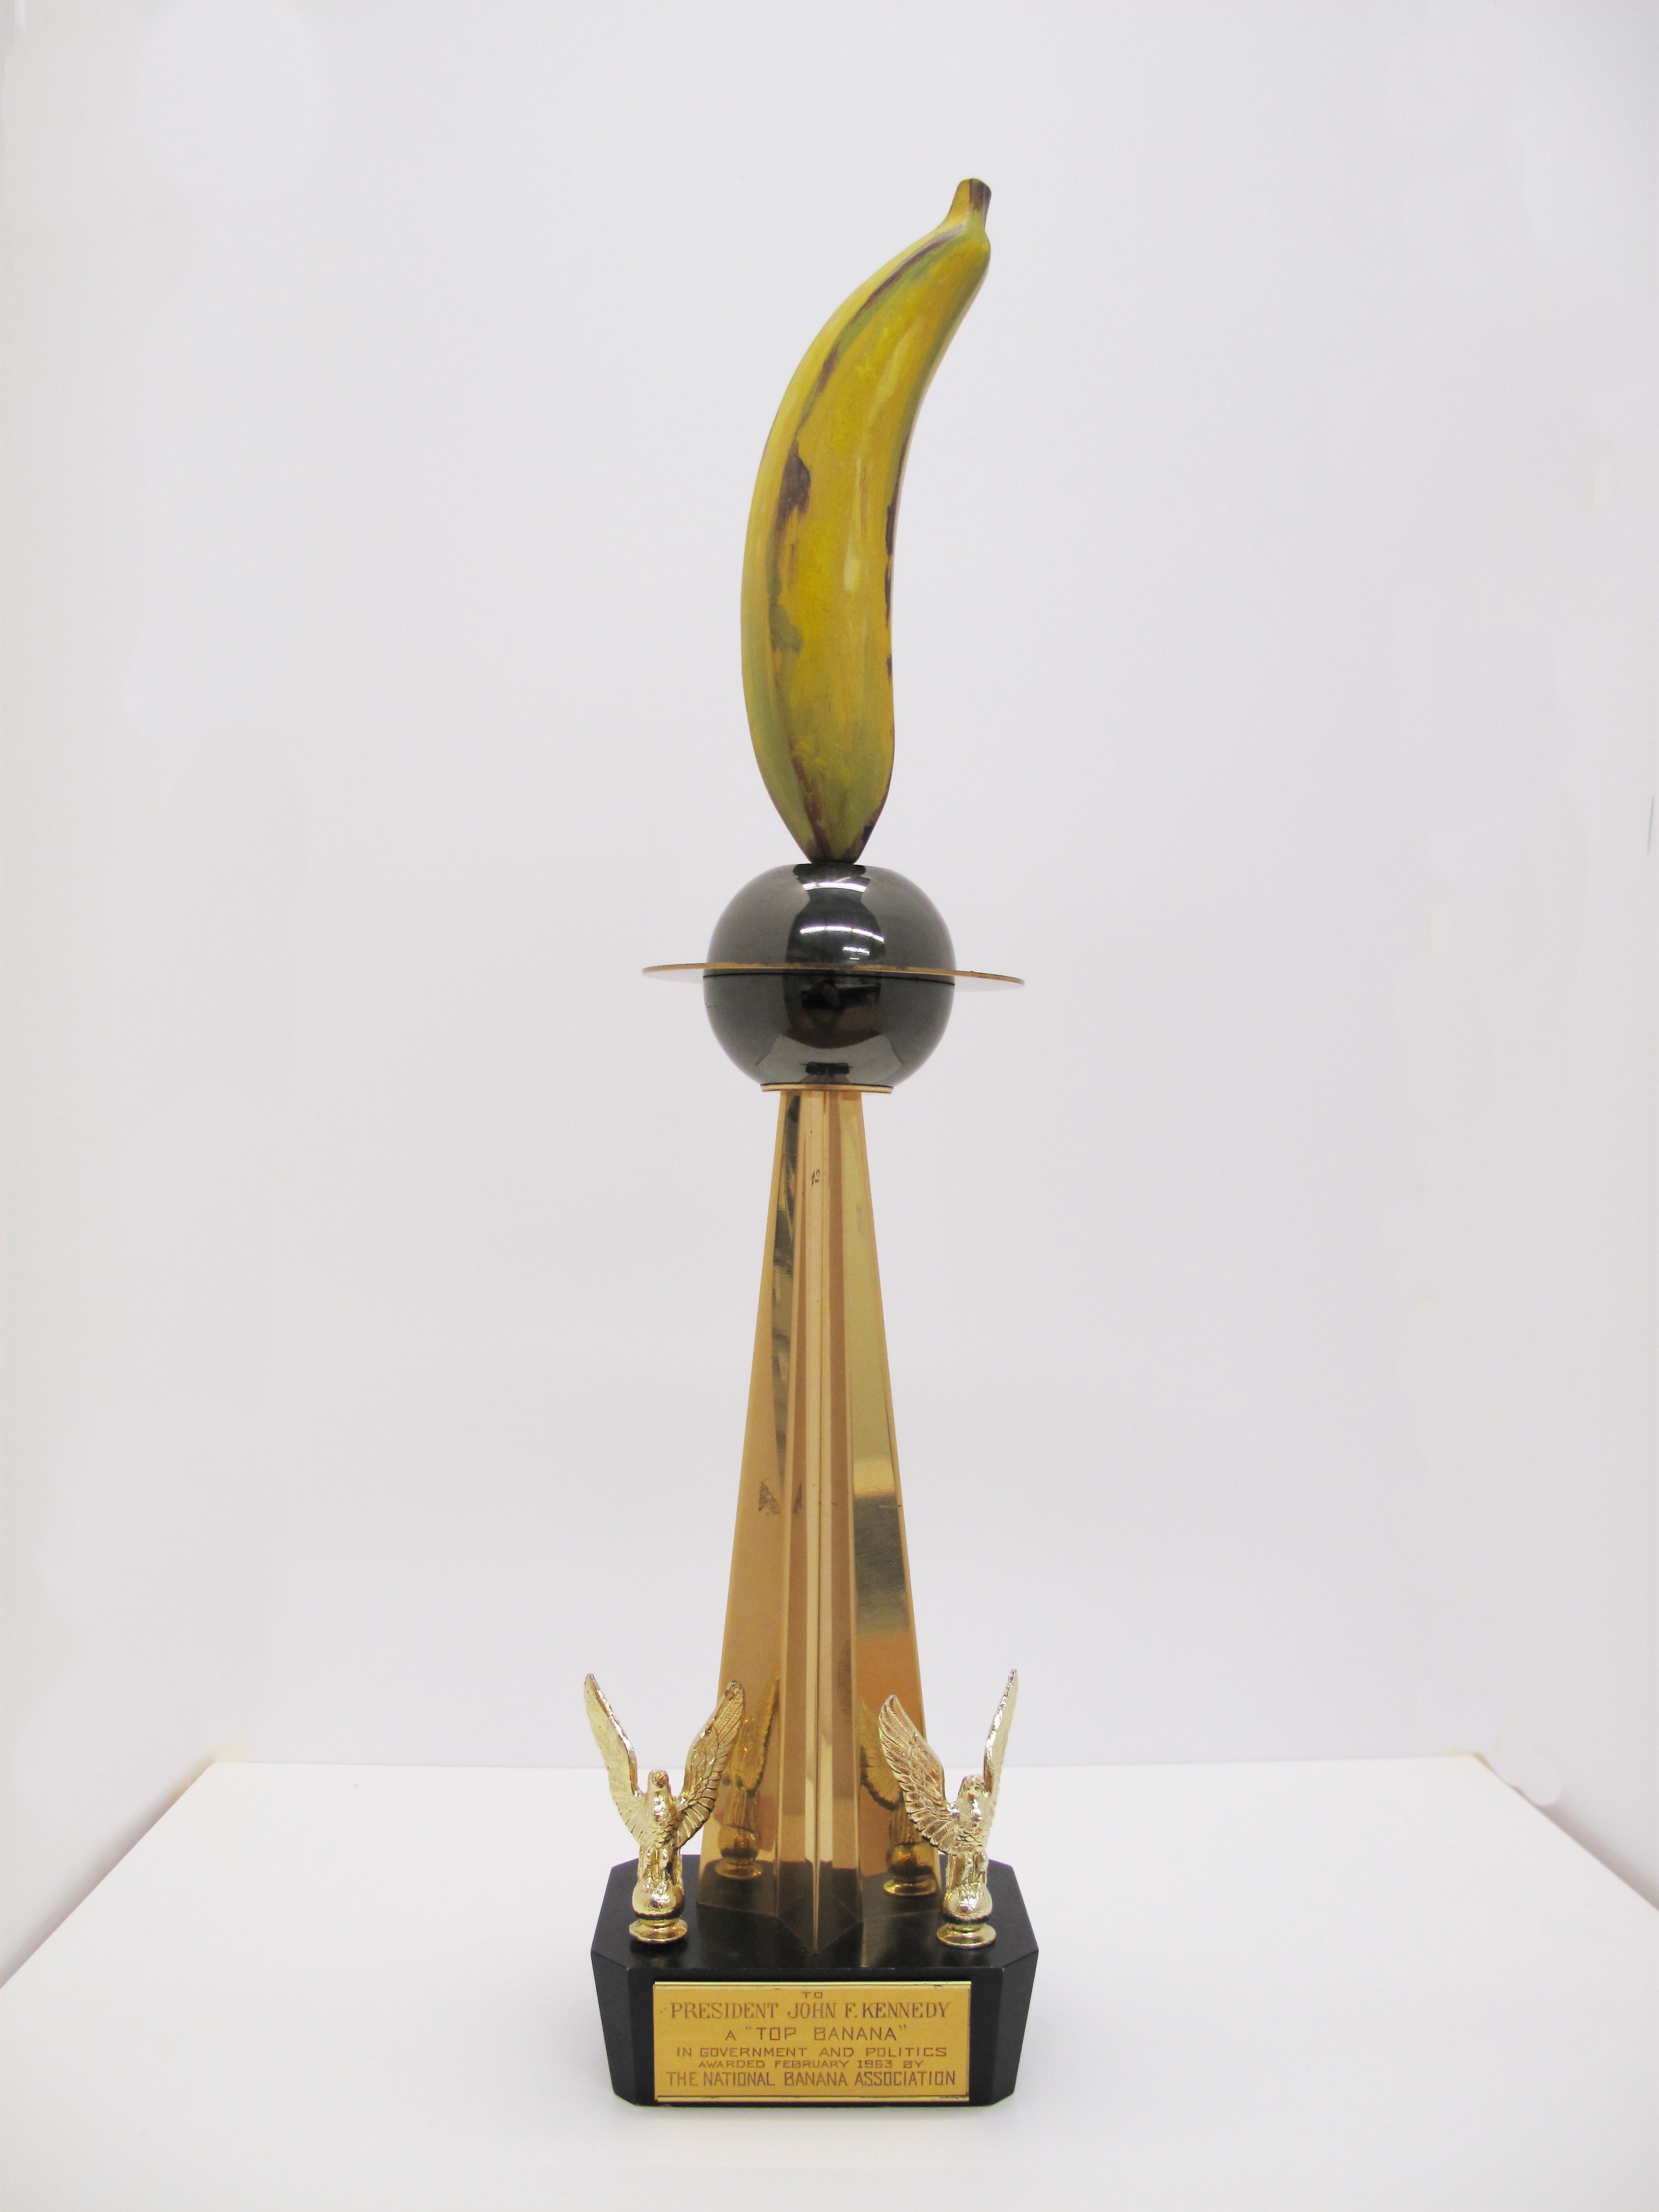 7 Inch Exclusive Decade Awards Banana Trophy on Black Base Top Banana Trophy Big Banana Award